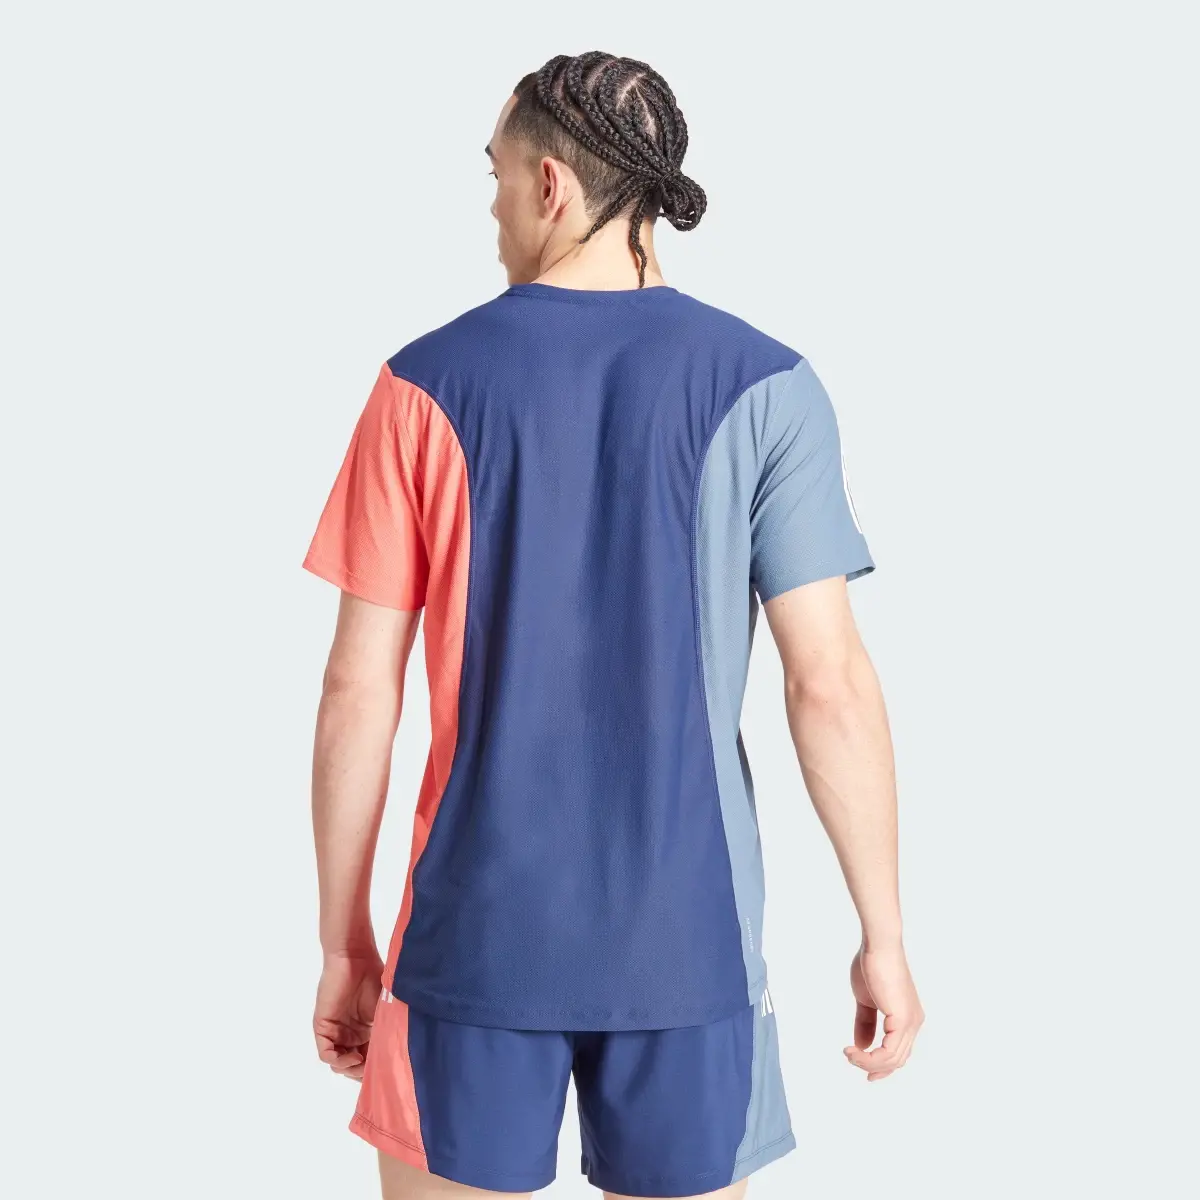 Adidas Own The Run Colorblock Tişört. 3